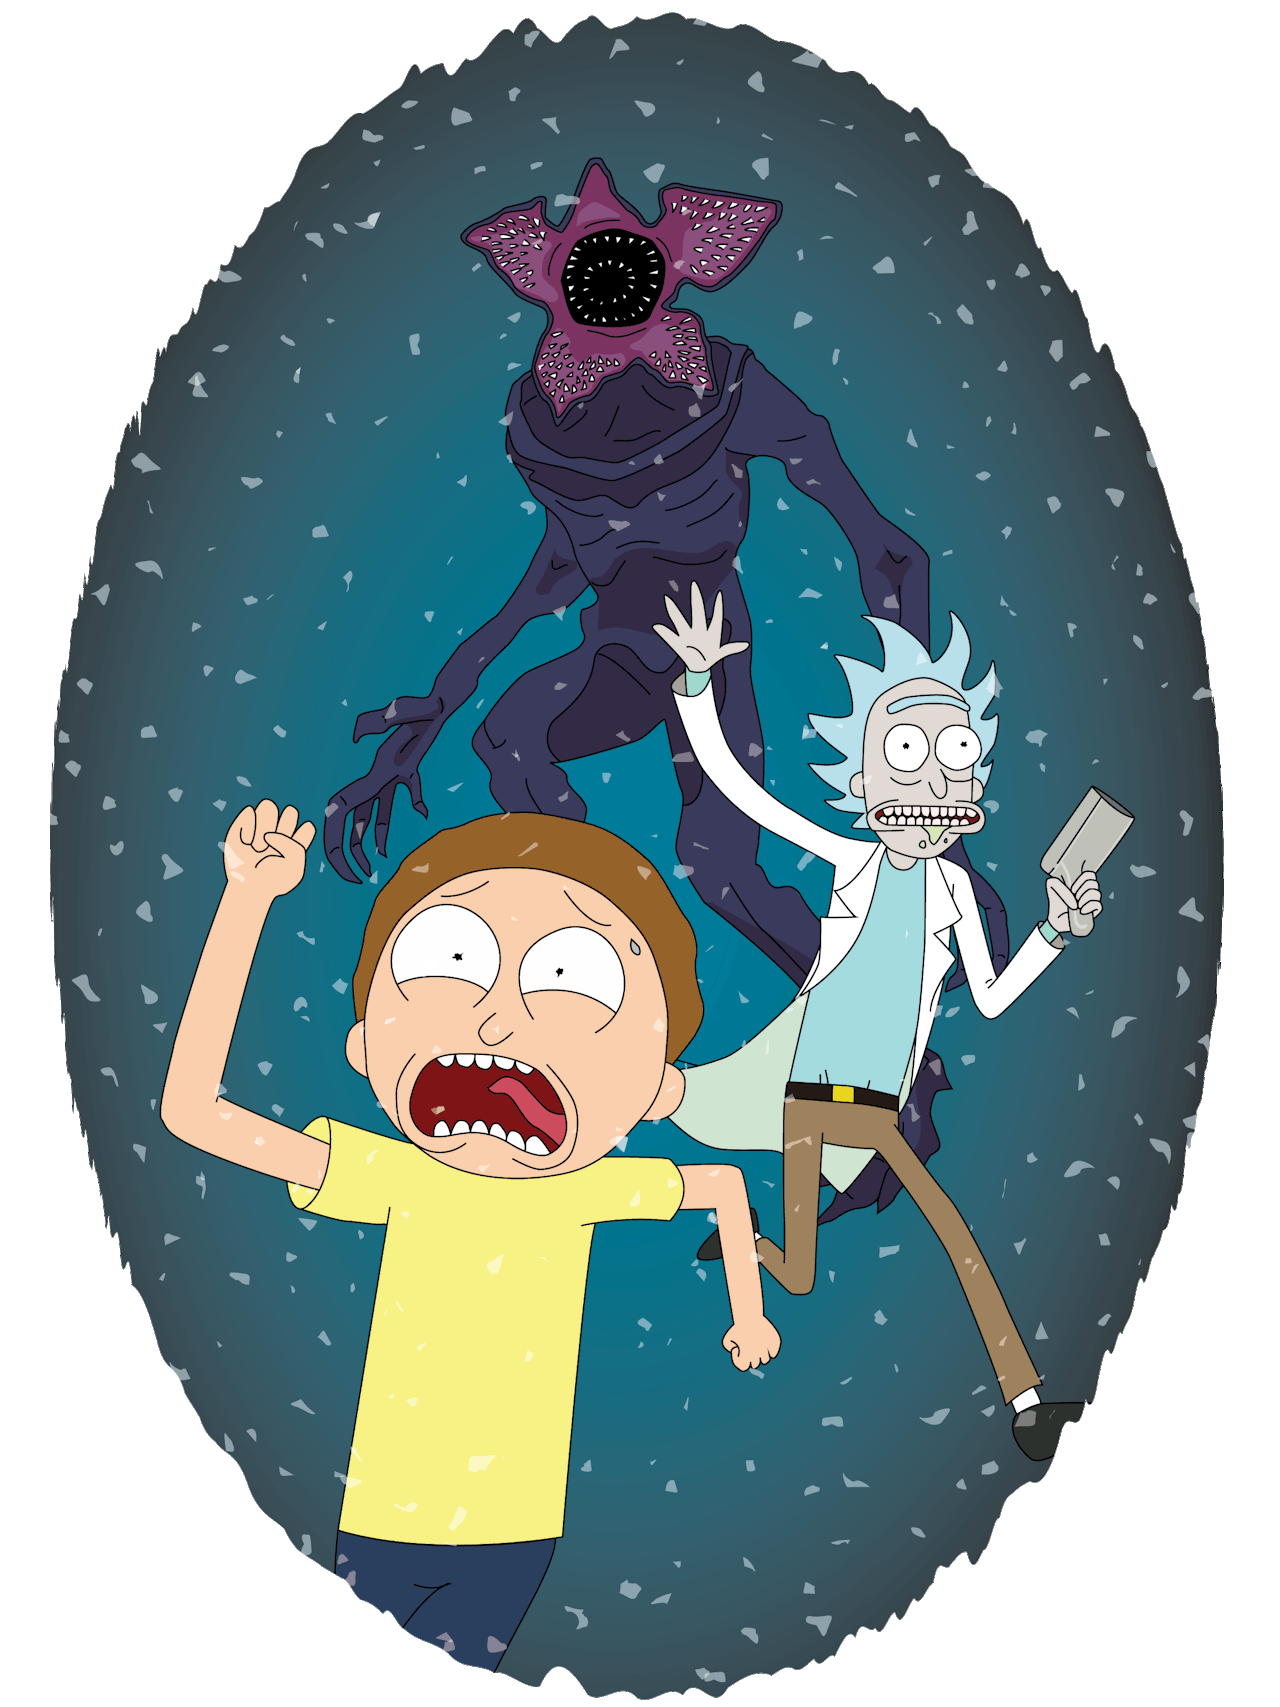 Rick and Morty meet the Demogorgon